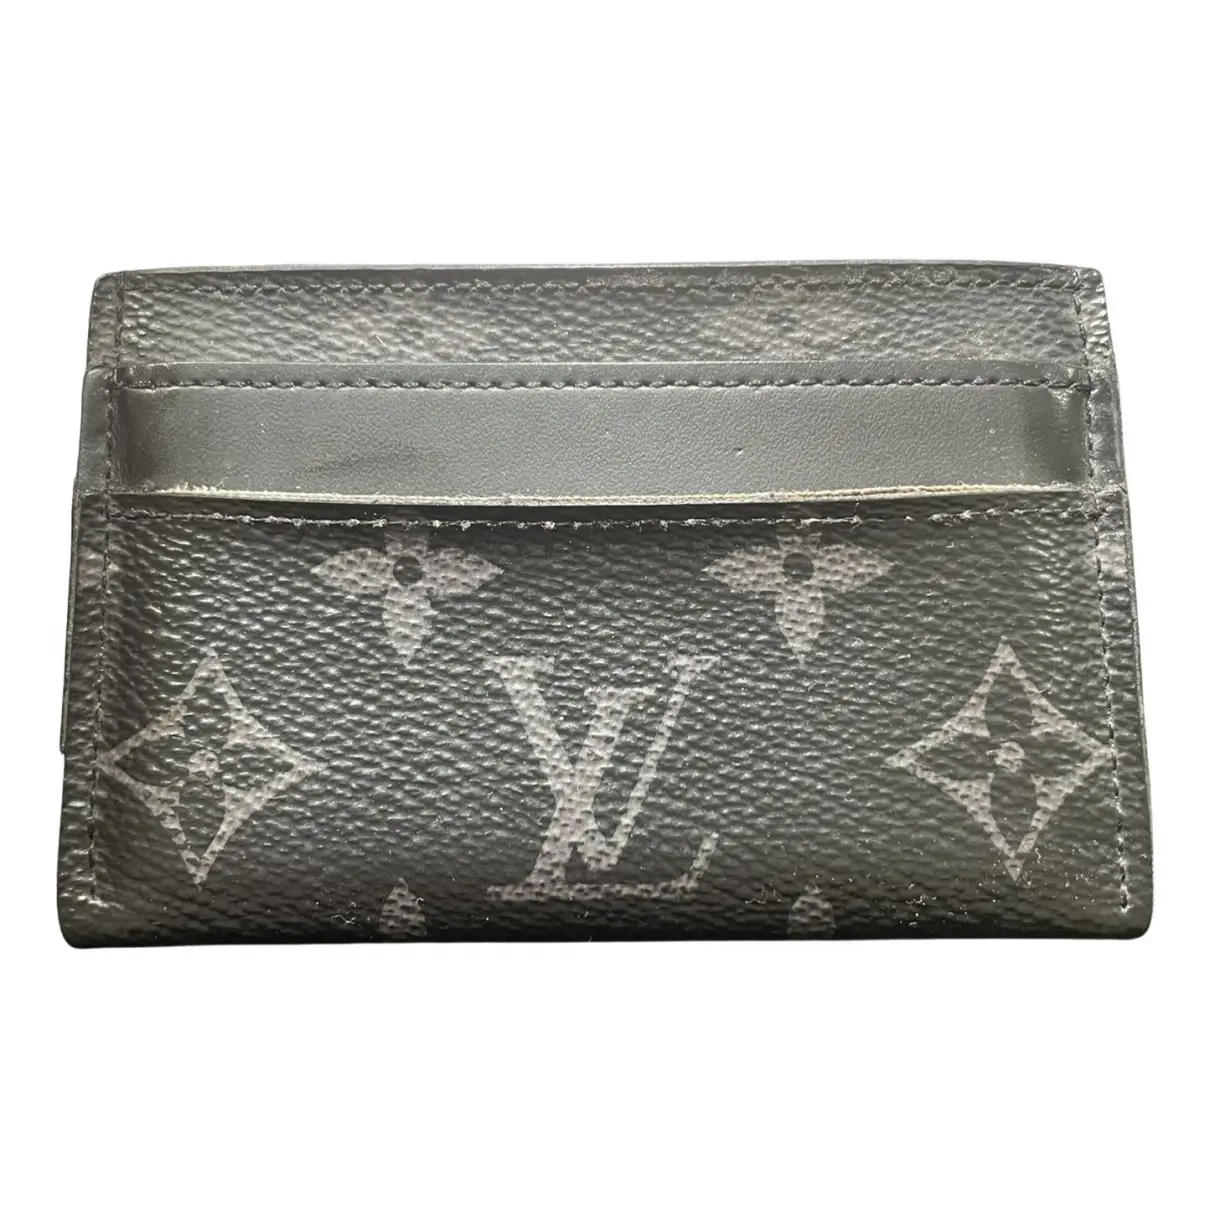  Coin Card Holder cloth small bag Louis Vuitton